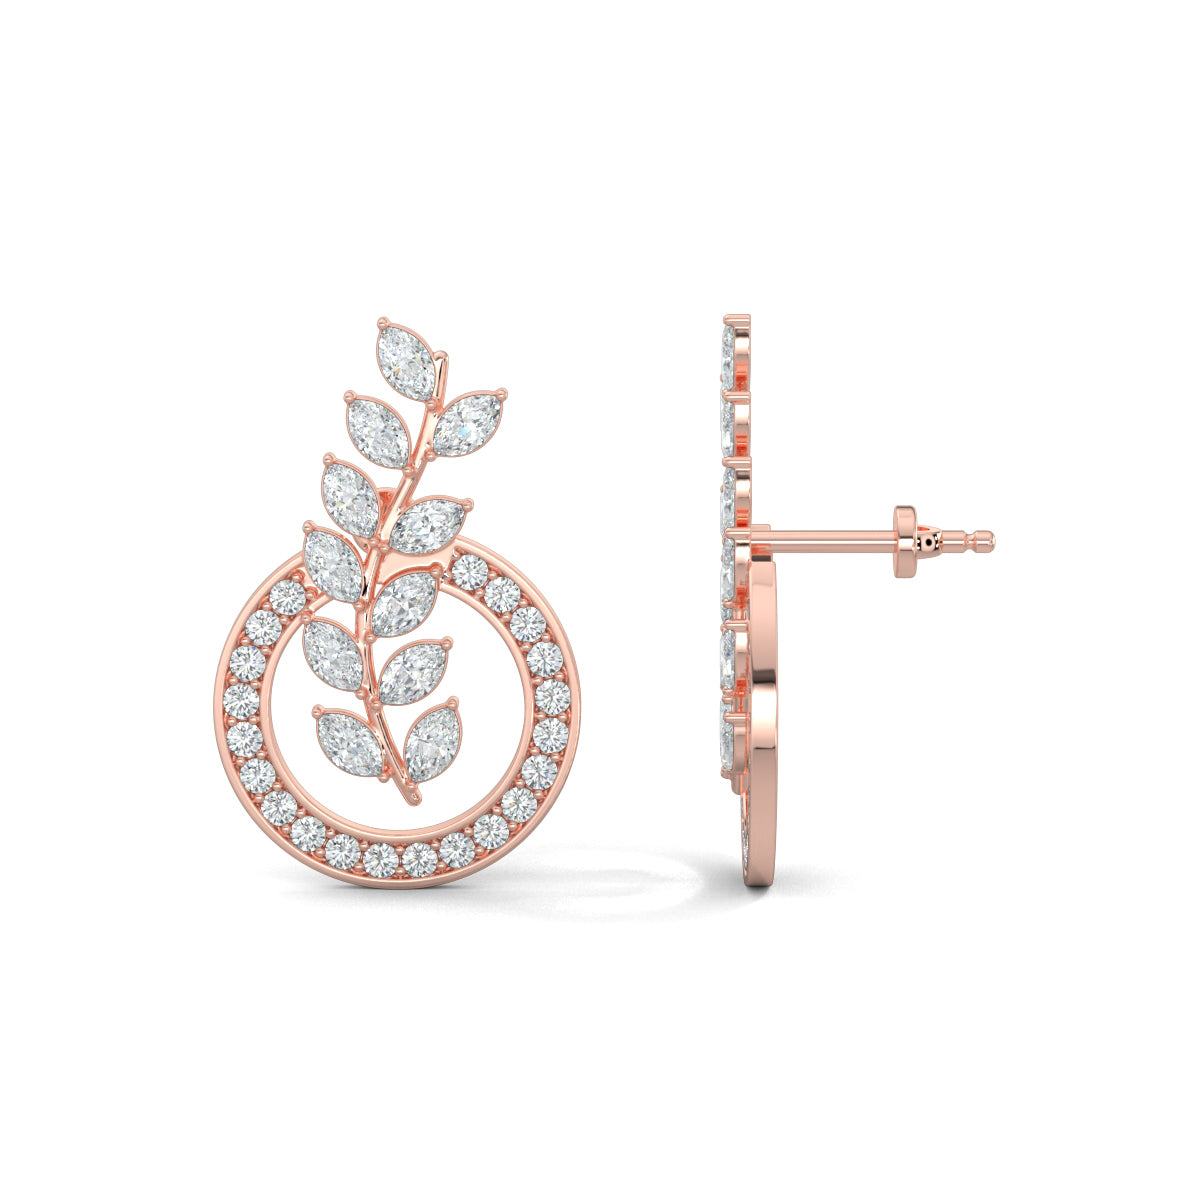 Rose Gold, Diamond Earrings, Natural diamond earrings, Lab-grown diamond earrings, Marquise Vine Earrings, Nature-inspired earrings, Vine-like design, Ethical diamonds, Elegance, Sparkling jewelry